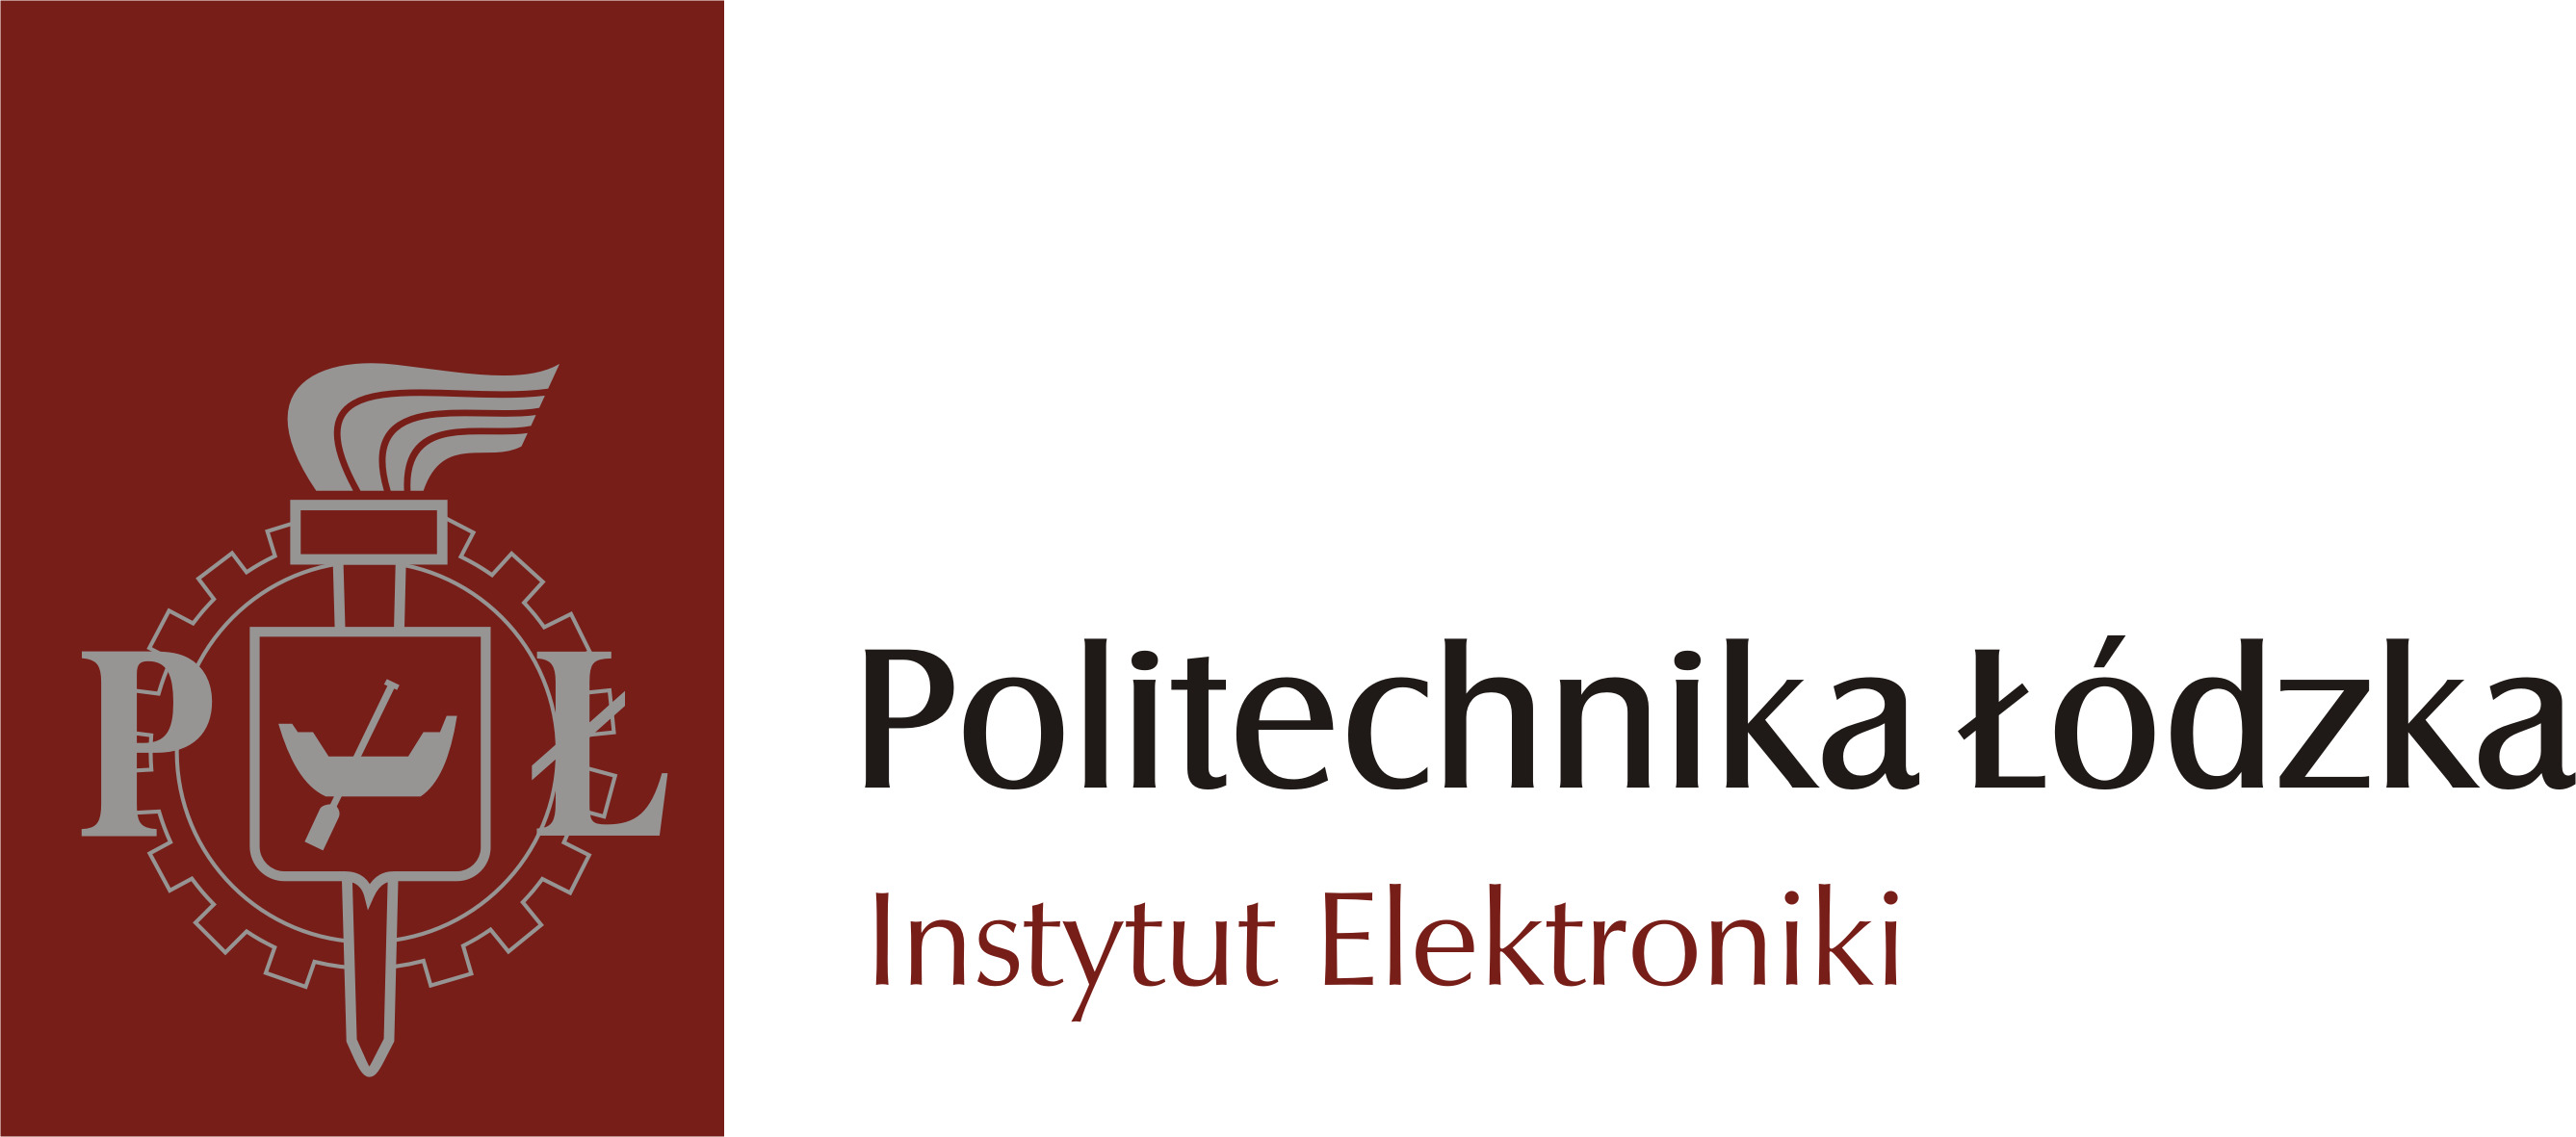 Politechnika Łódzka Instytut Elektroniki